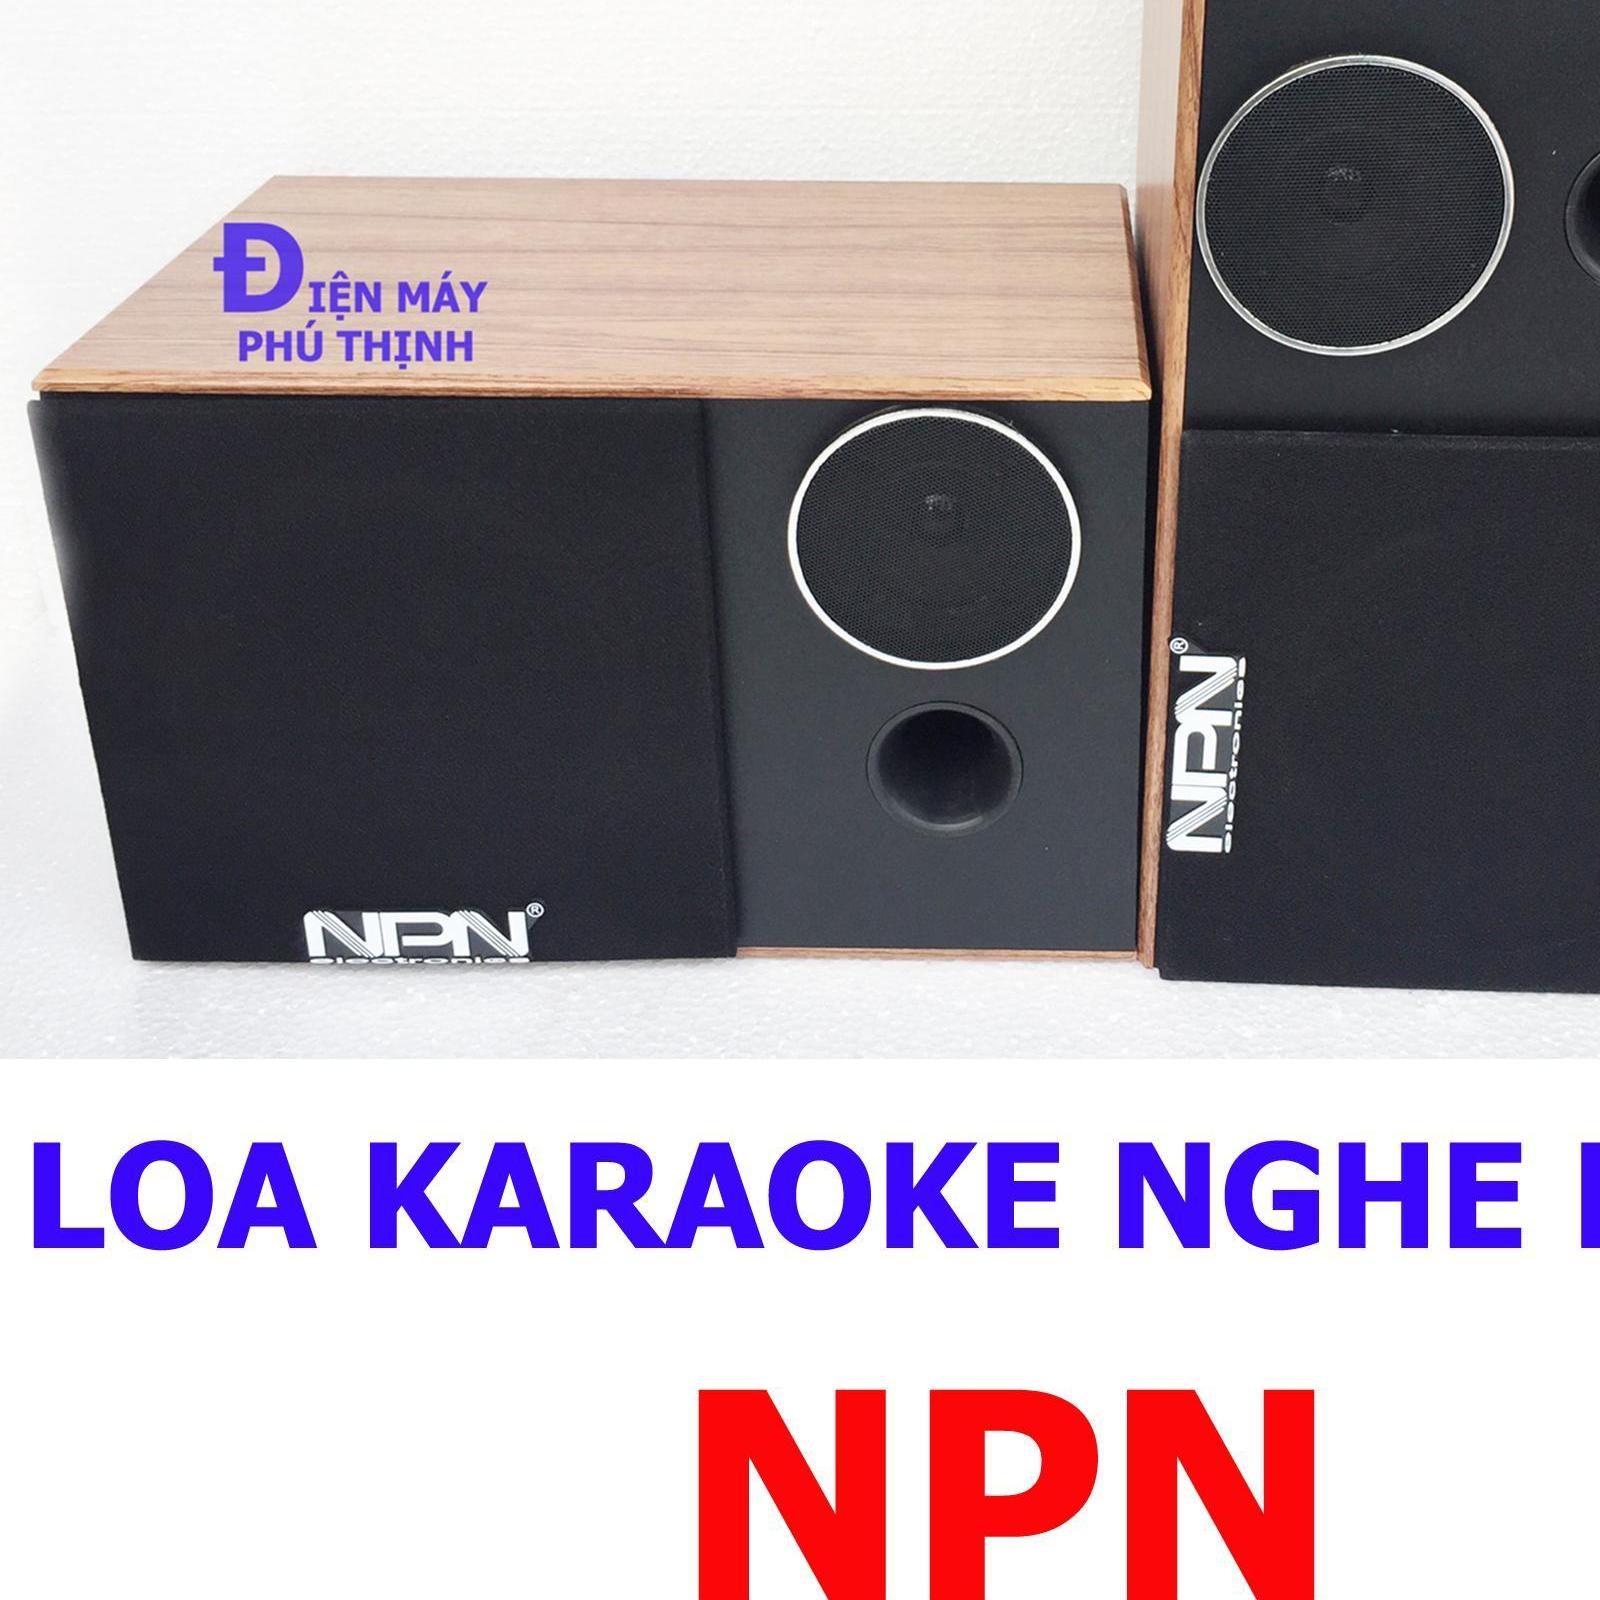 Loa karaoke LOA nghe nhạc gia đình NPN PT2TR hát karaoke hay giá rẻ